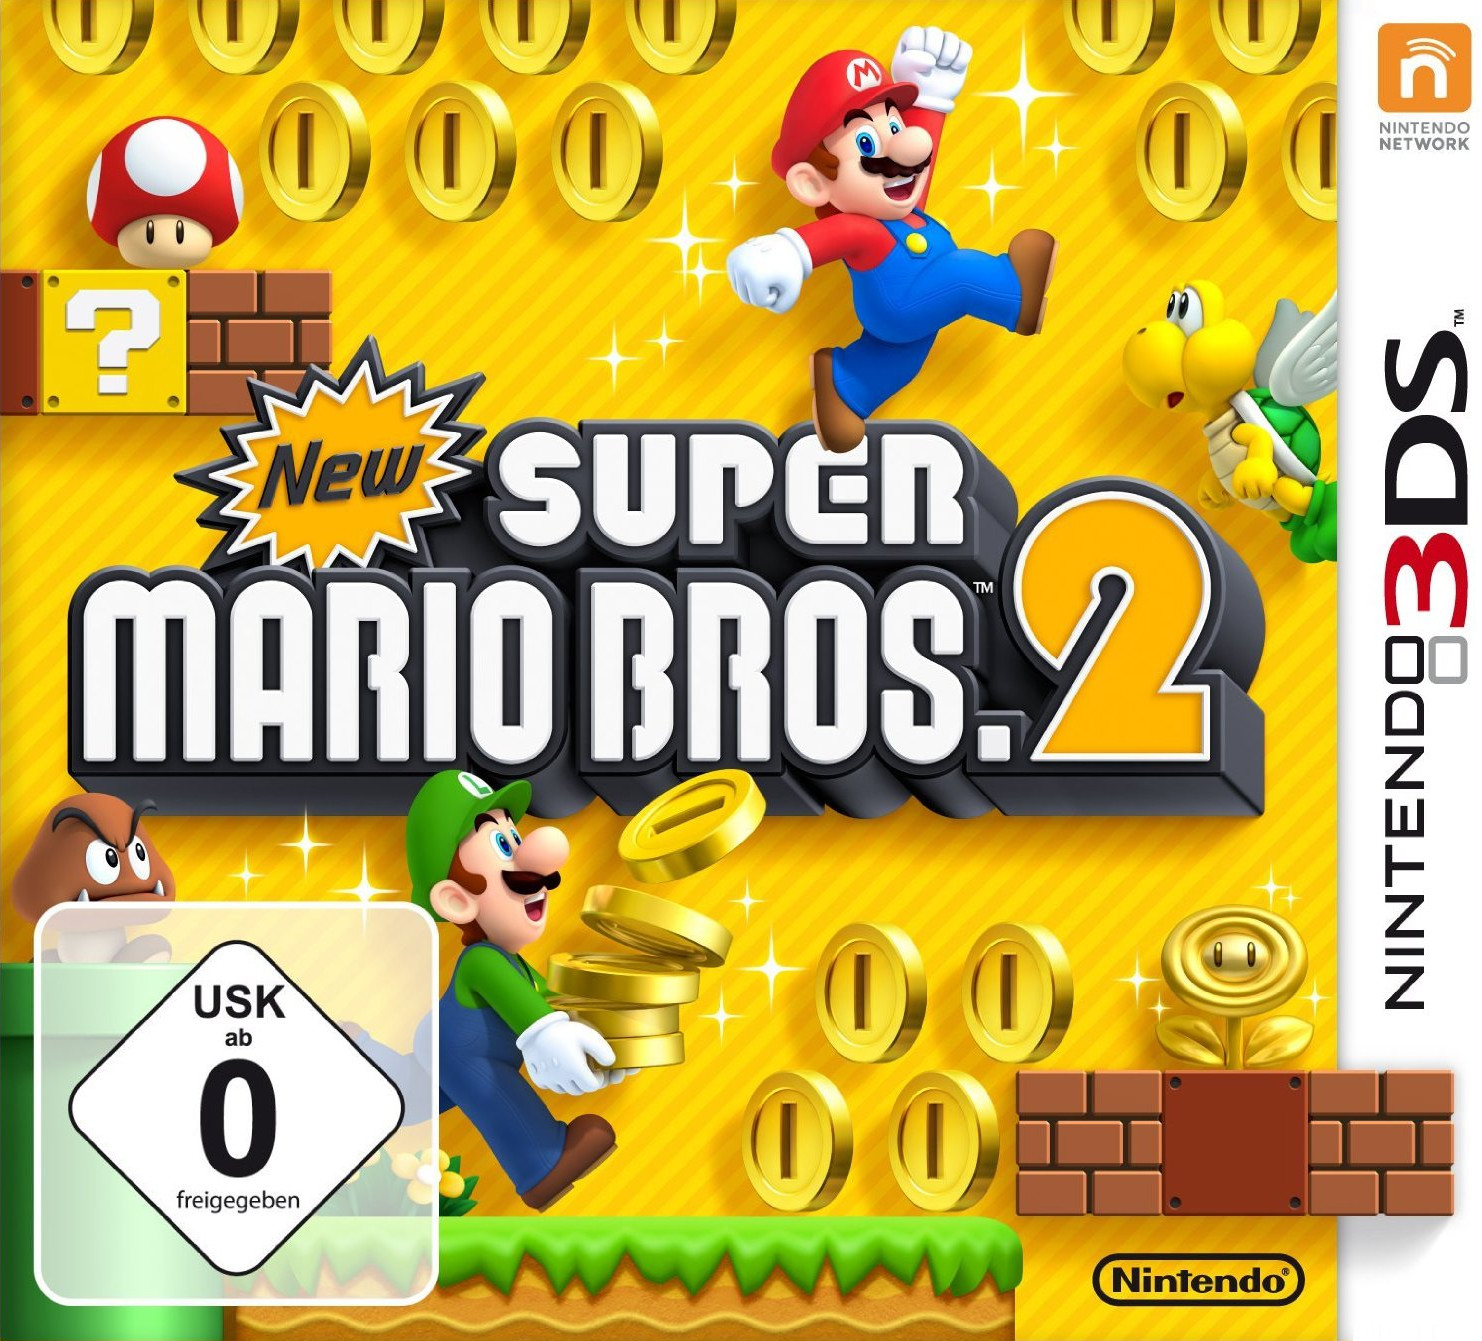 Super New [Nintendo 3DS] Mario - Bros. 2